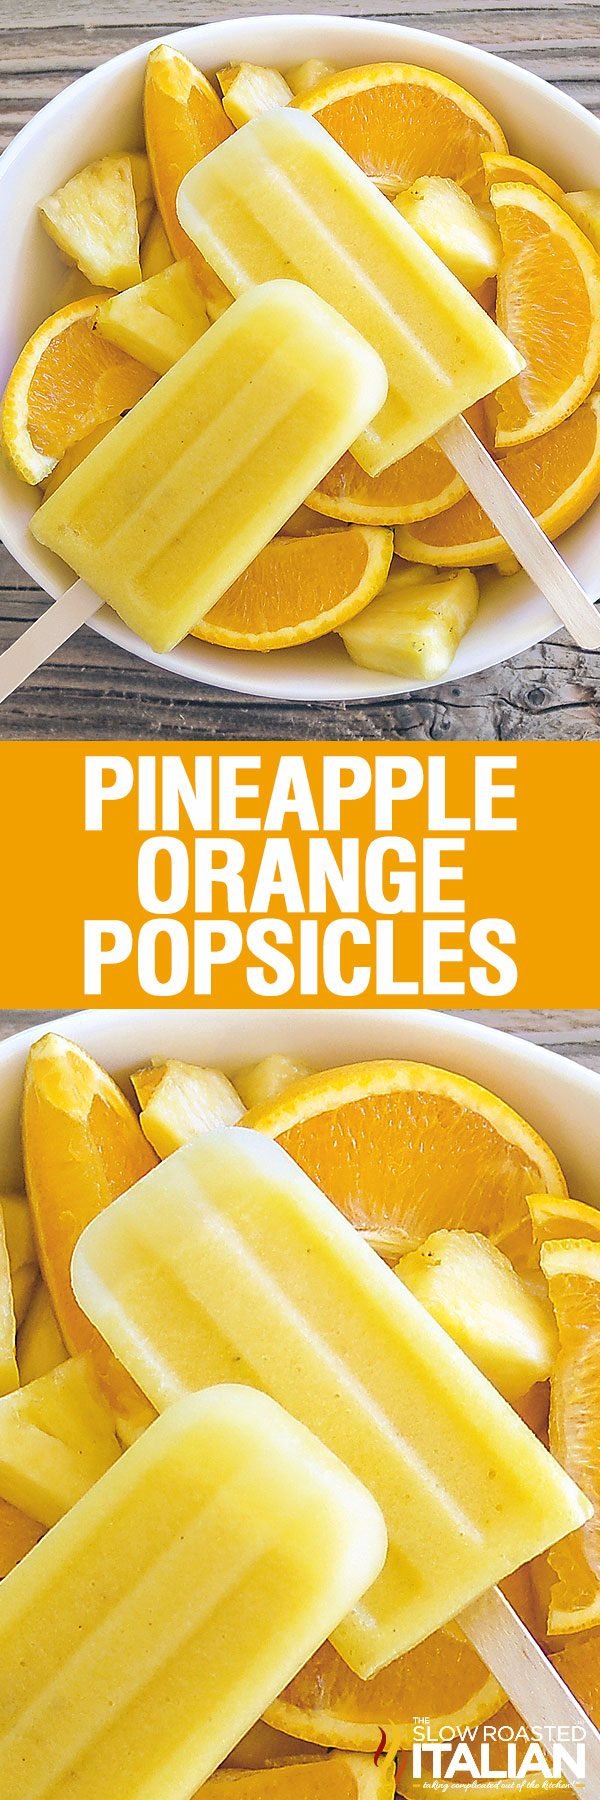 pineapple orange popsicles-pin